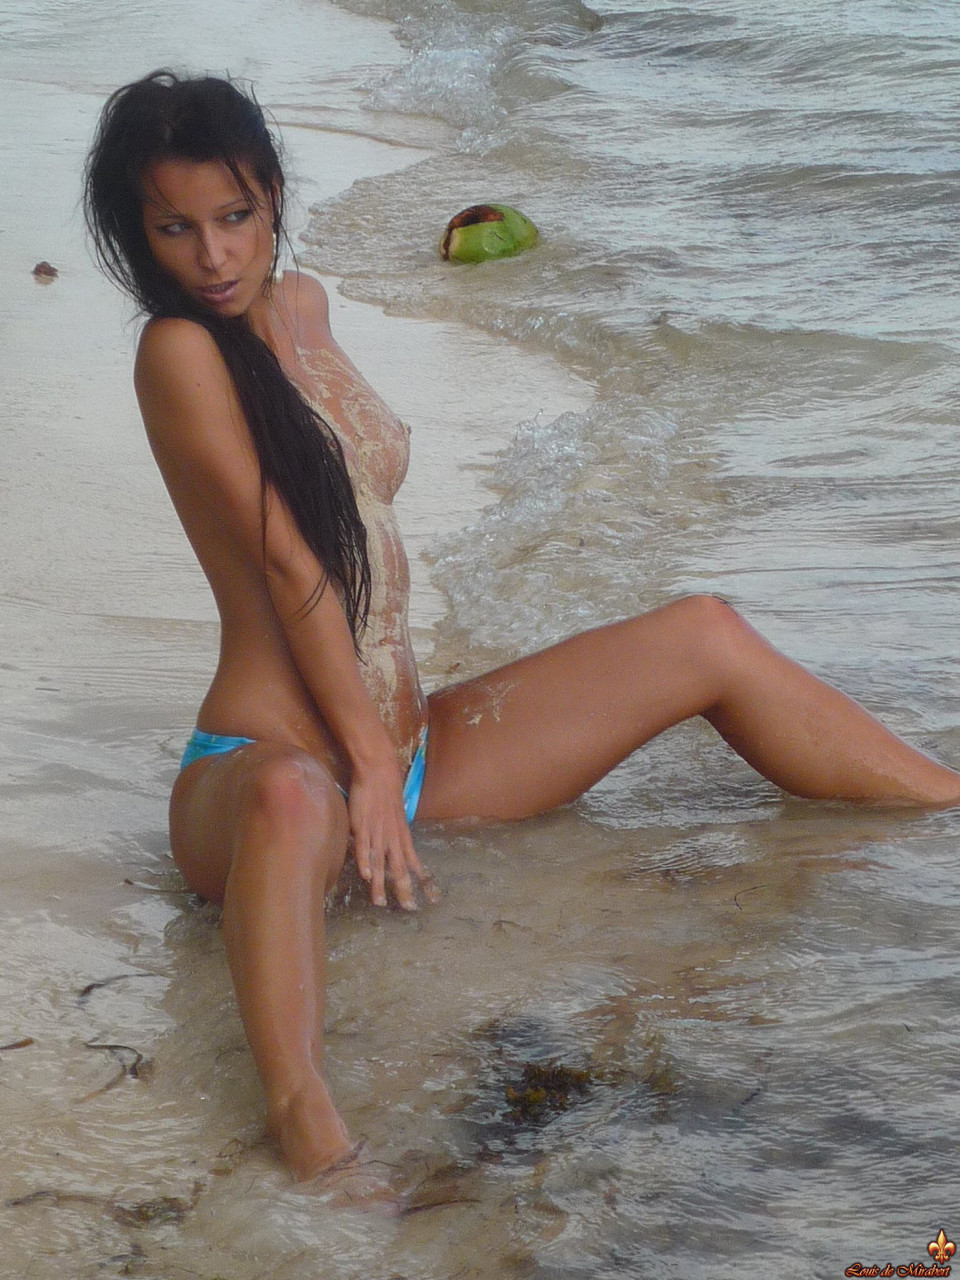 Beautiful girls work free of their swimwear while modeling on a tropical beach 포르노 사진 #424108096